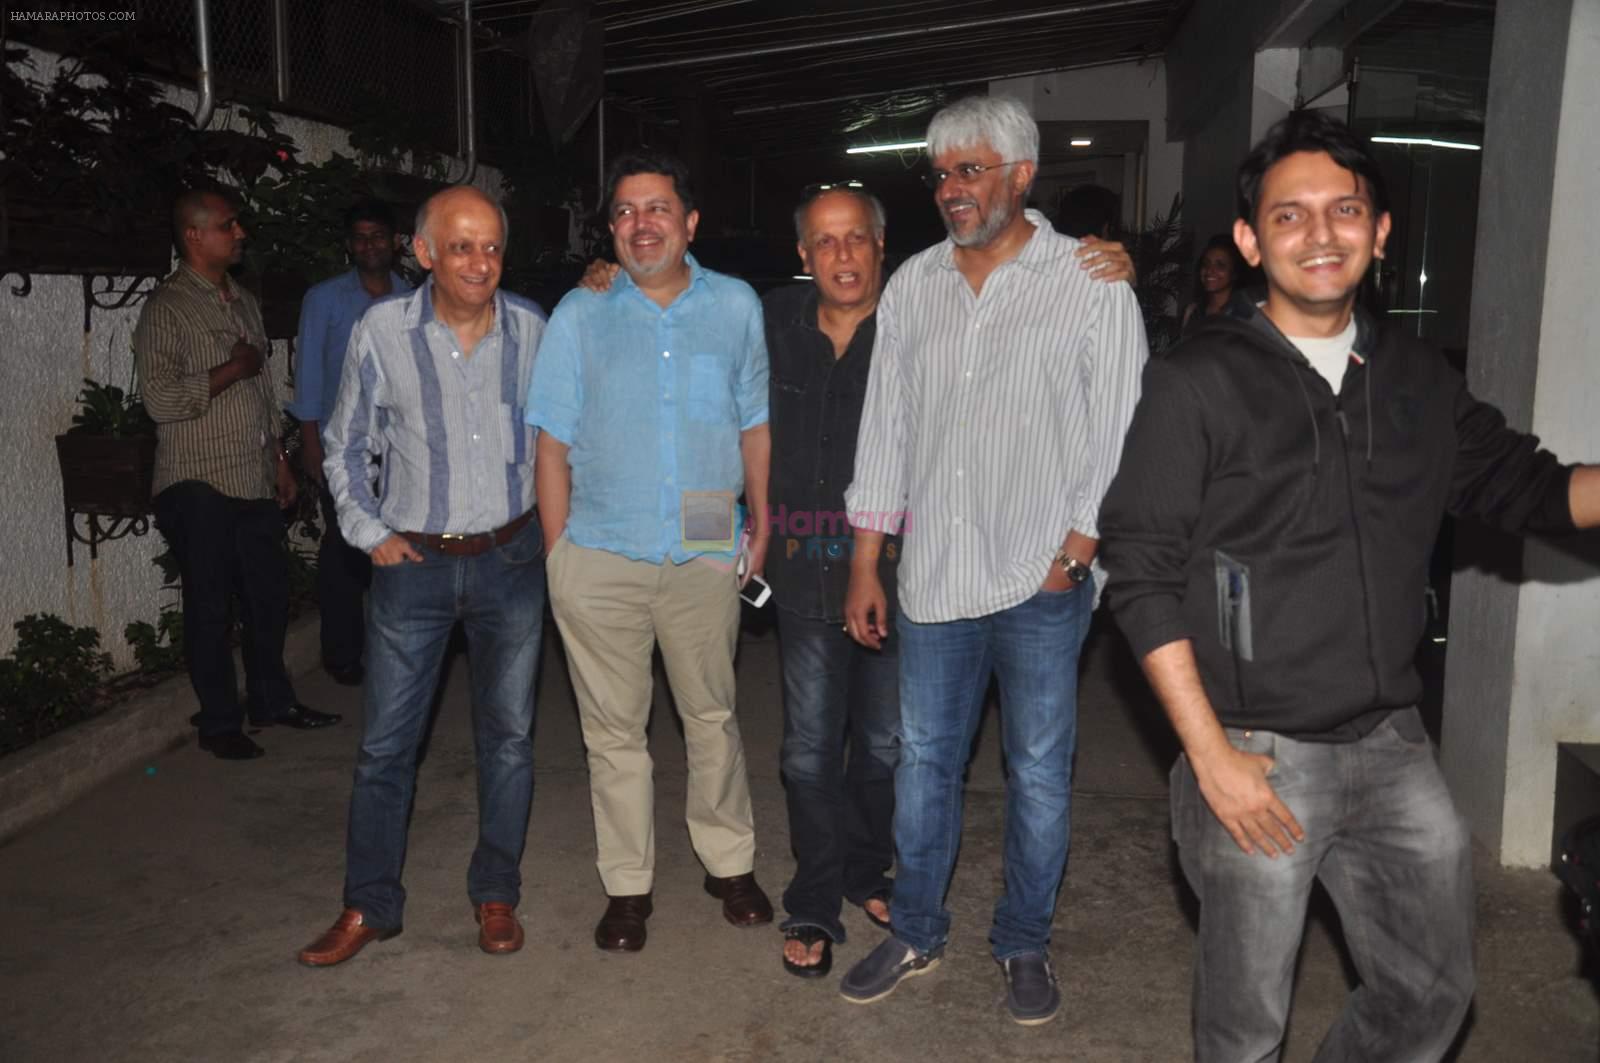 Mahesh Bhatt, Mukesh Bhatt, Vikram Bhatt, Vishesh Bhatt at Detective Byomkesh Bakshi screening in Sunny Super Sound, Mumbai on 2nd April 2015